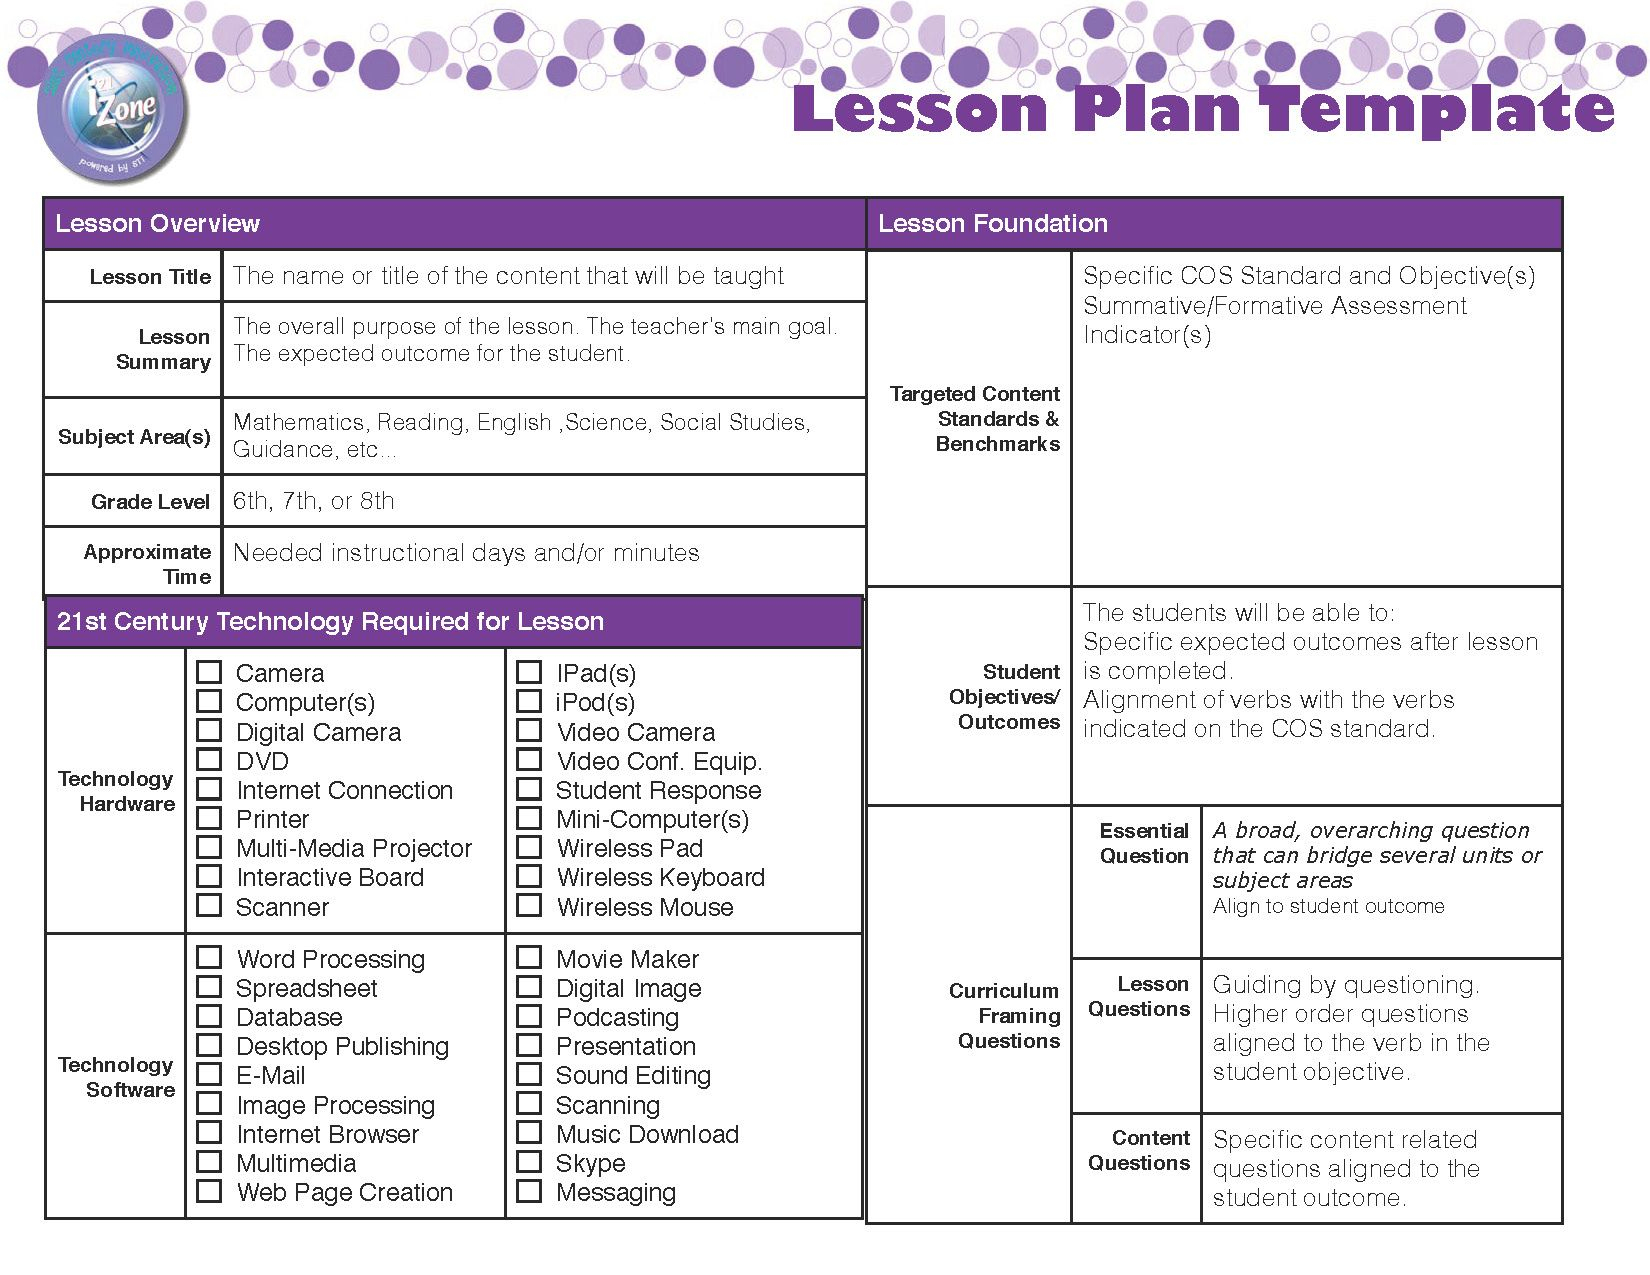 Lesson Plan Template (With Images) | Teacher Lesson Plans